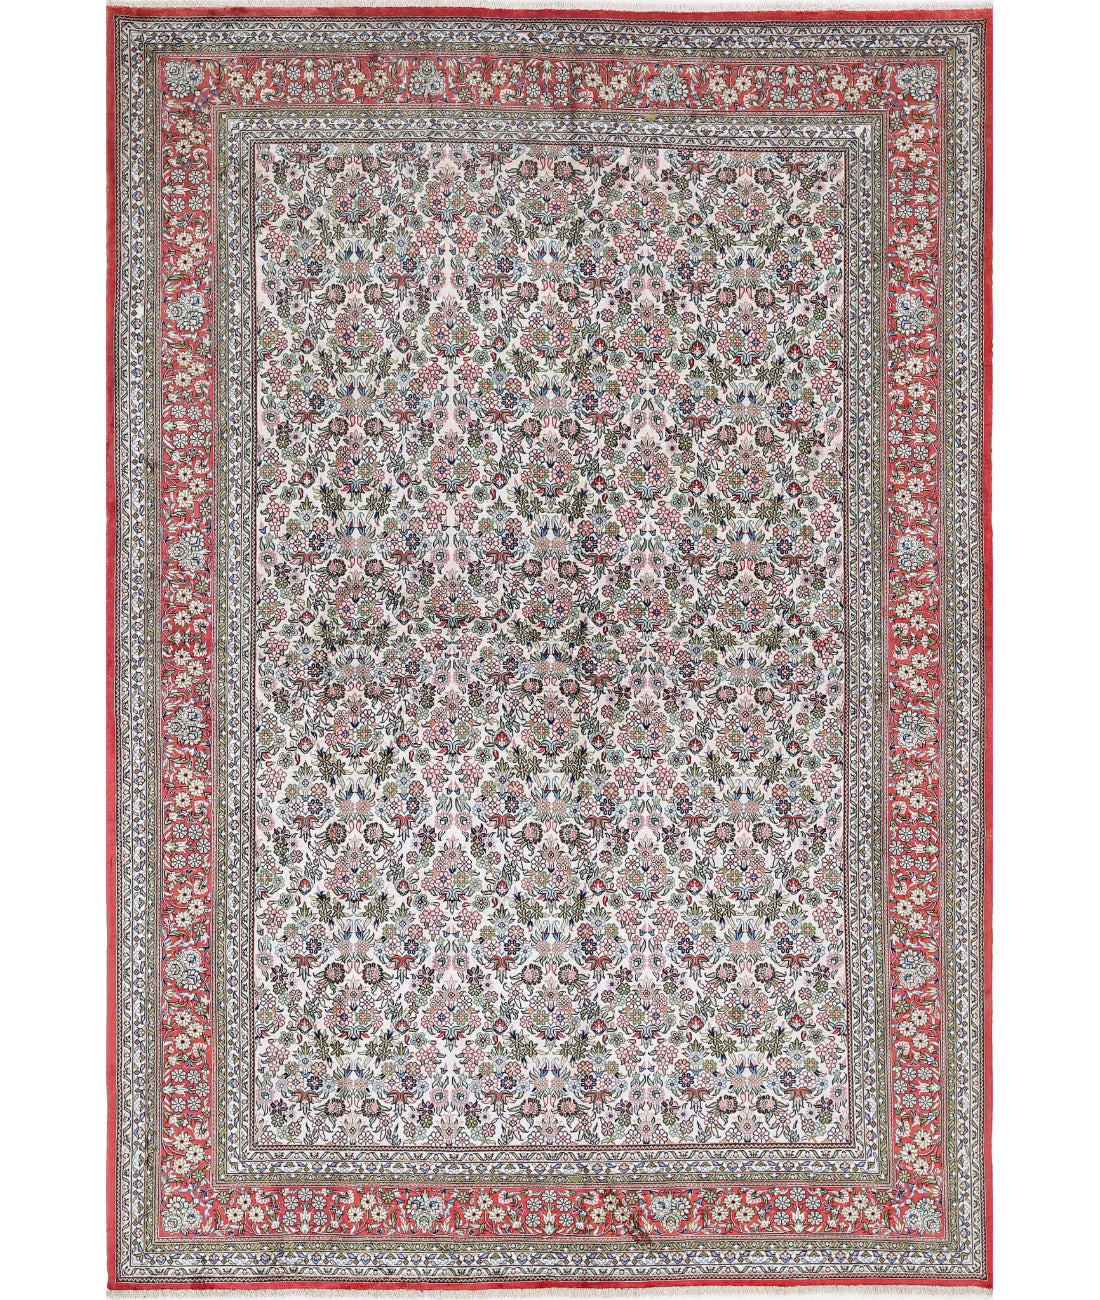 Hand Knotted Masterpiece Hereke Silk Rug - 6'1'' x 7'11'' 6'1'' x 7'11'' (183 X 238) / Ivory / Pink